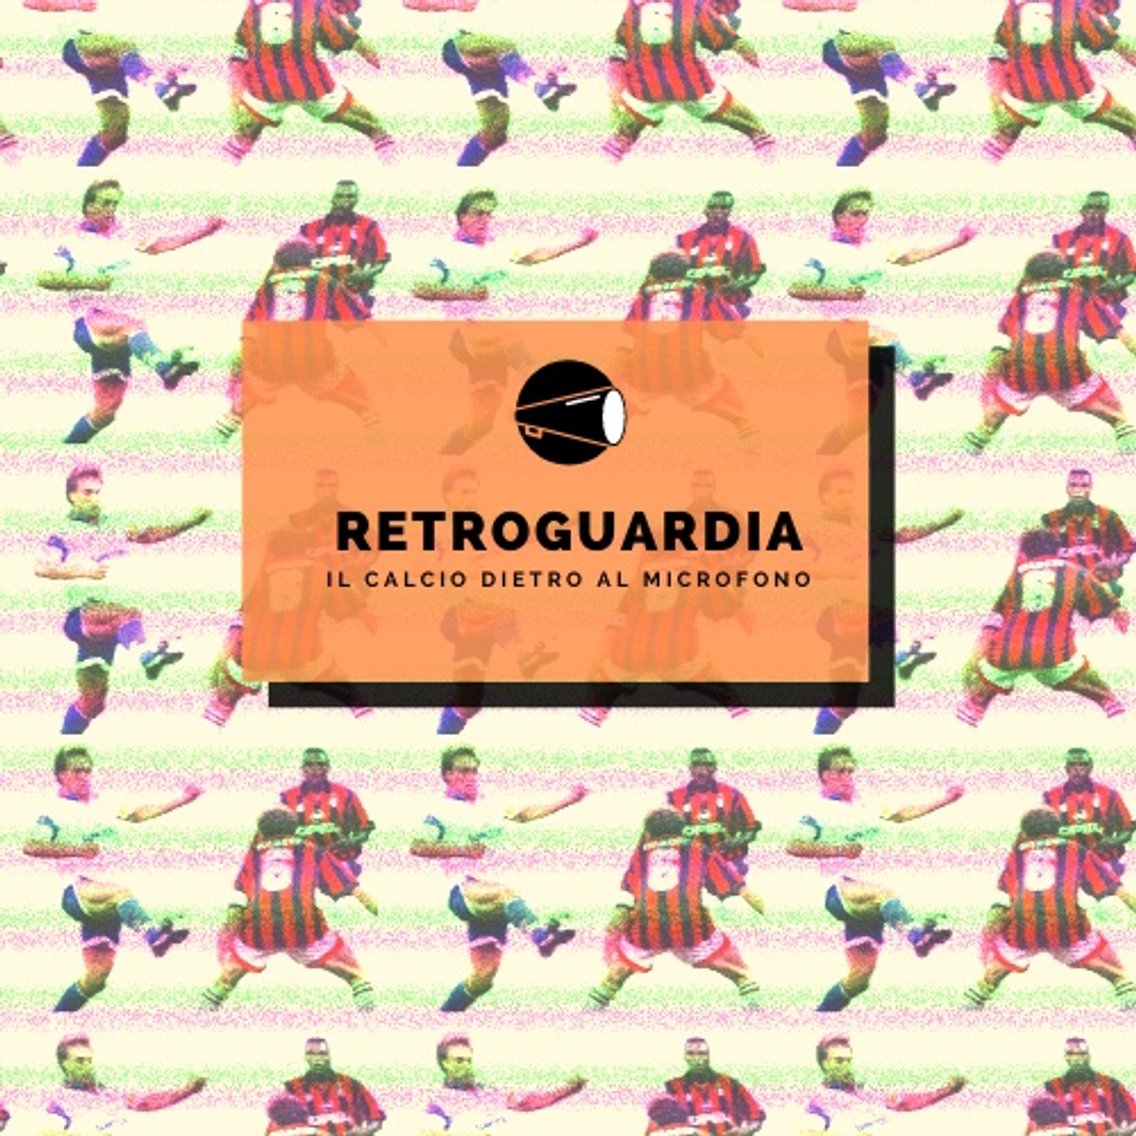 Retroguardia - Cover Image